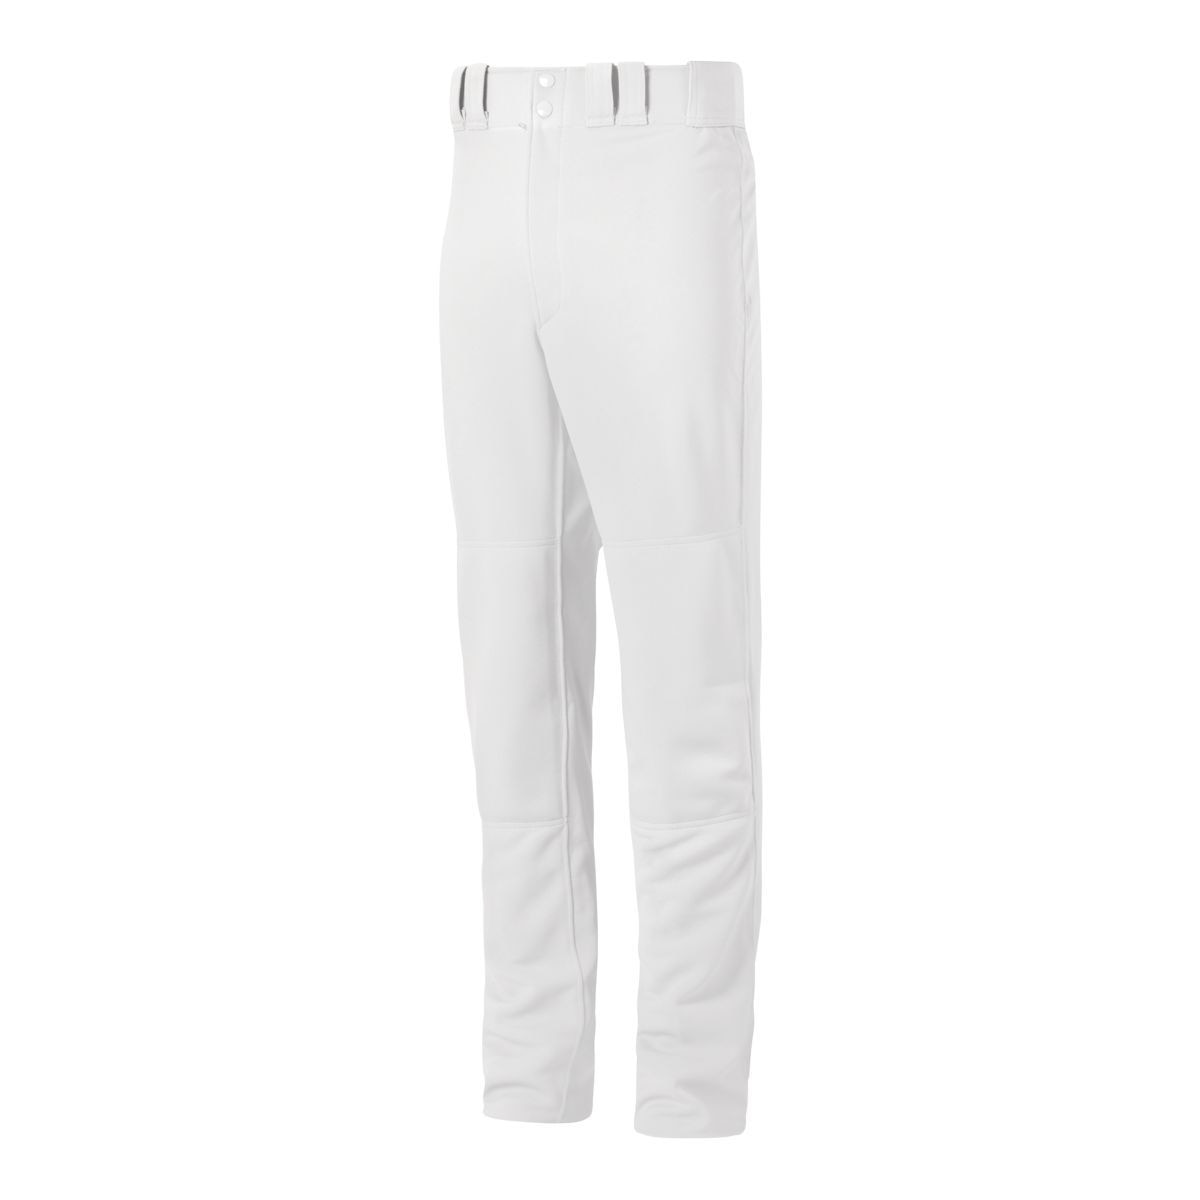 Mizuno Premier Pro Adult Pants - White